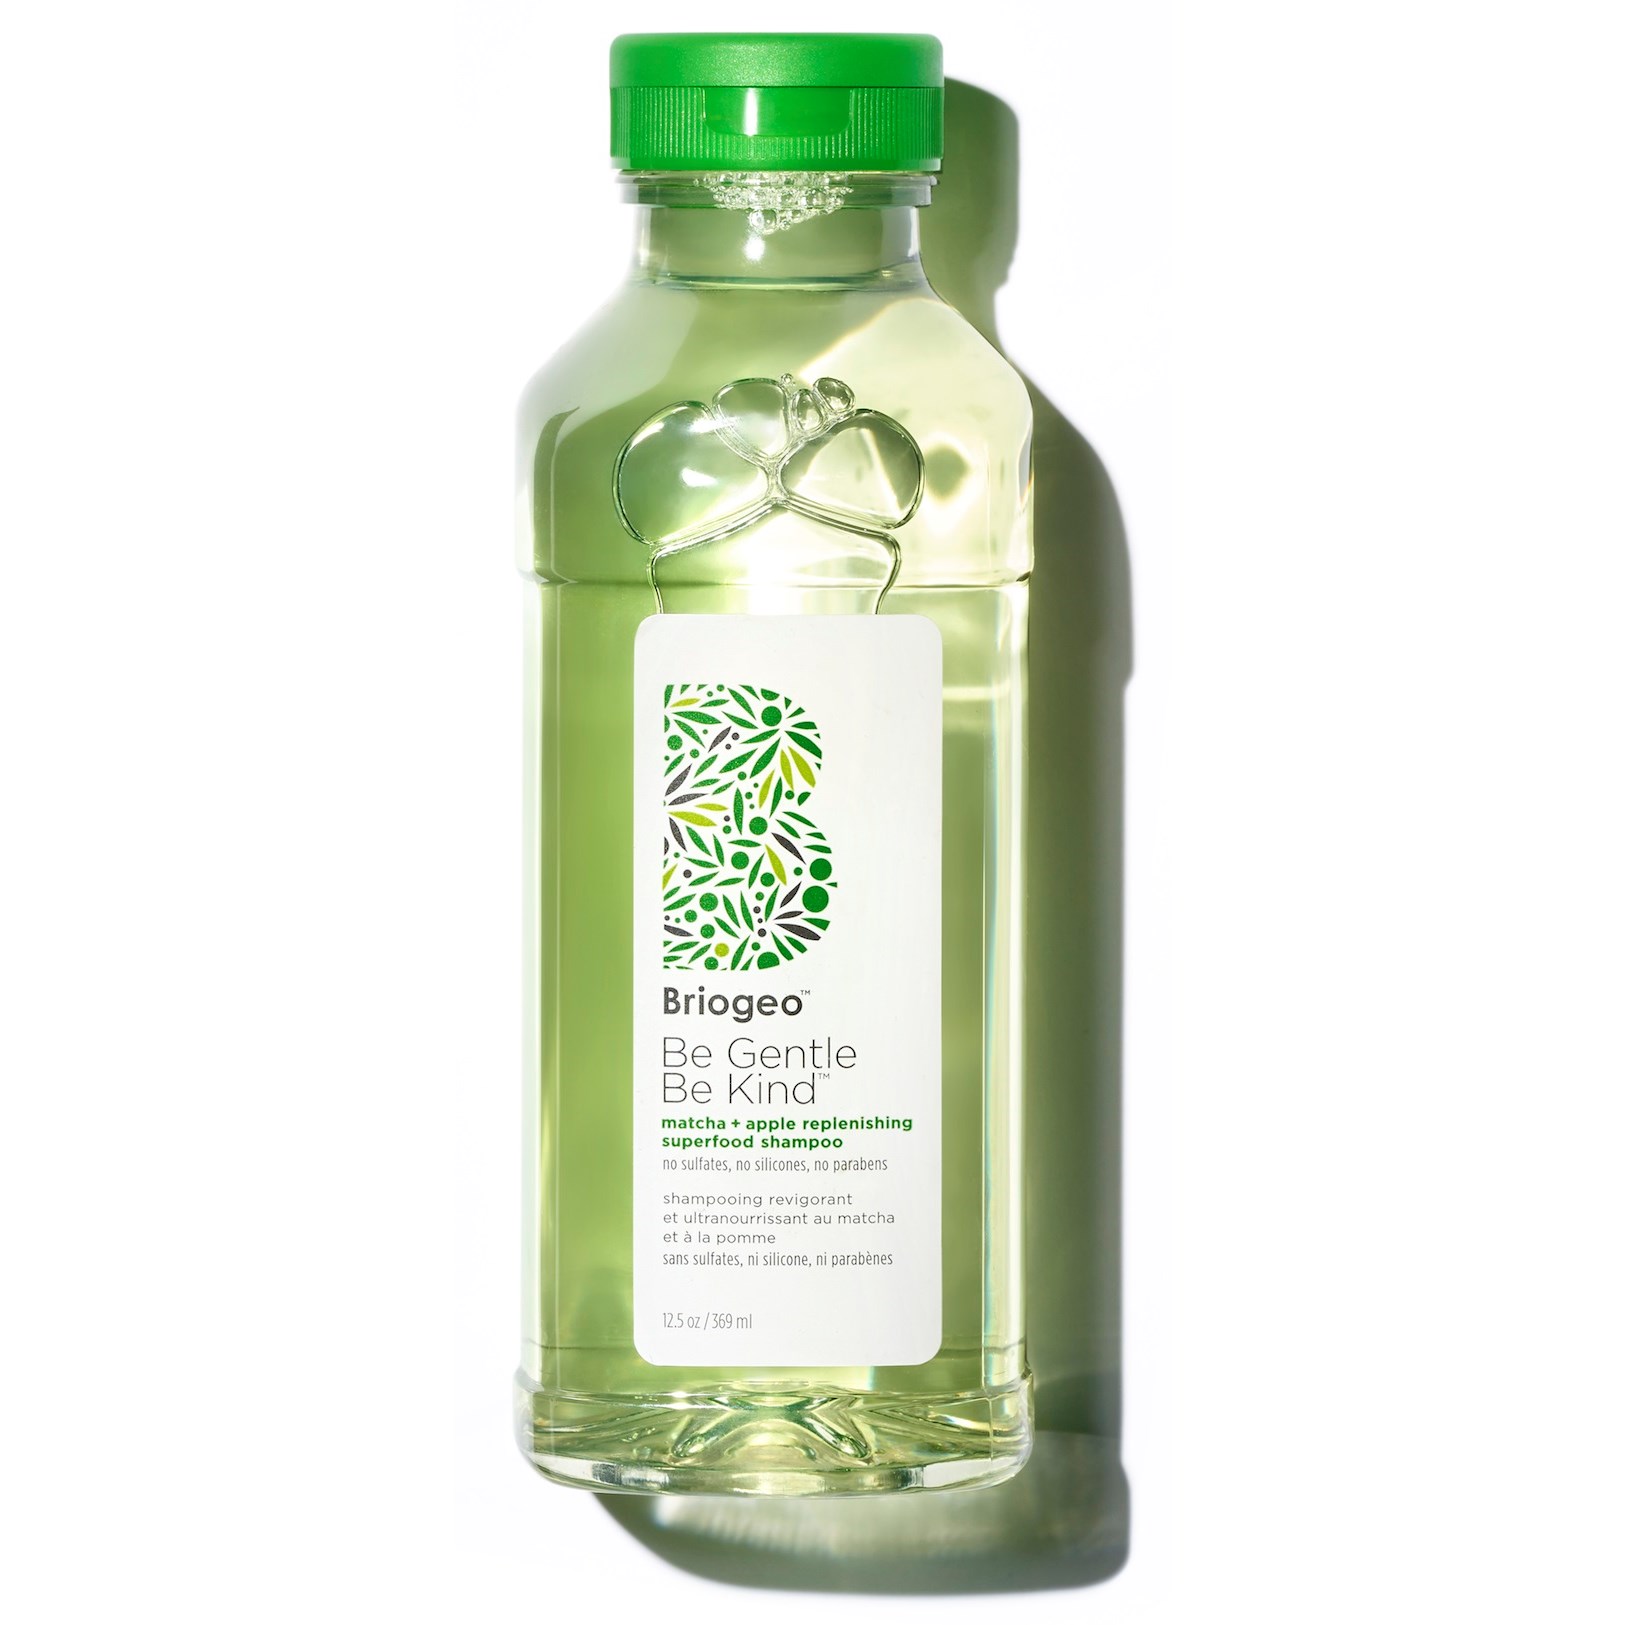 Briogeo Be Gentle, Be Kind Matcha + Apple Replenishing Superfood Shampoo 369 ml